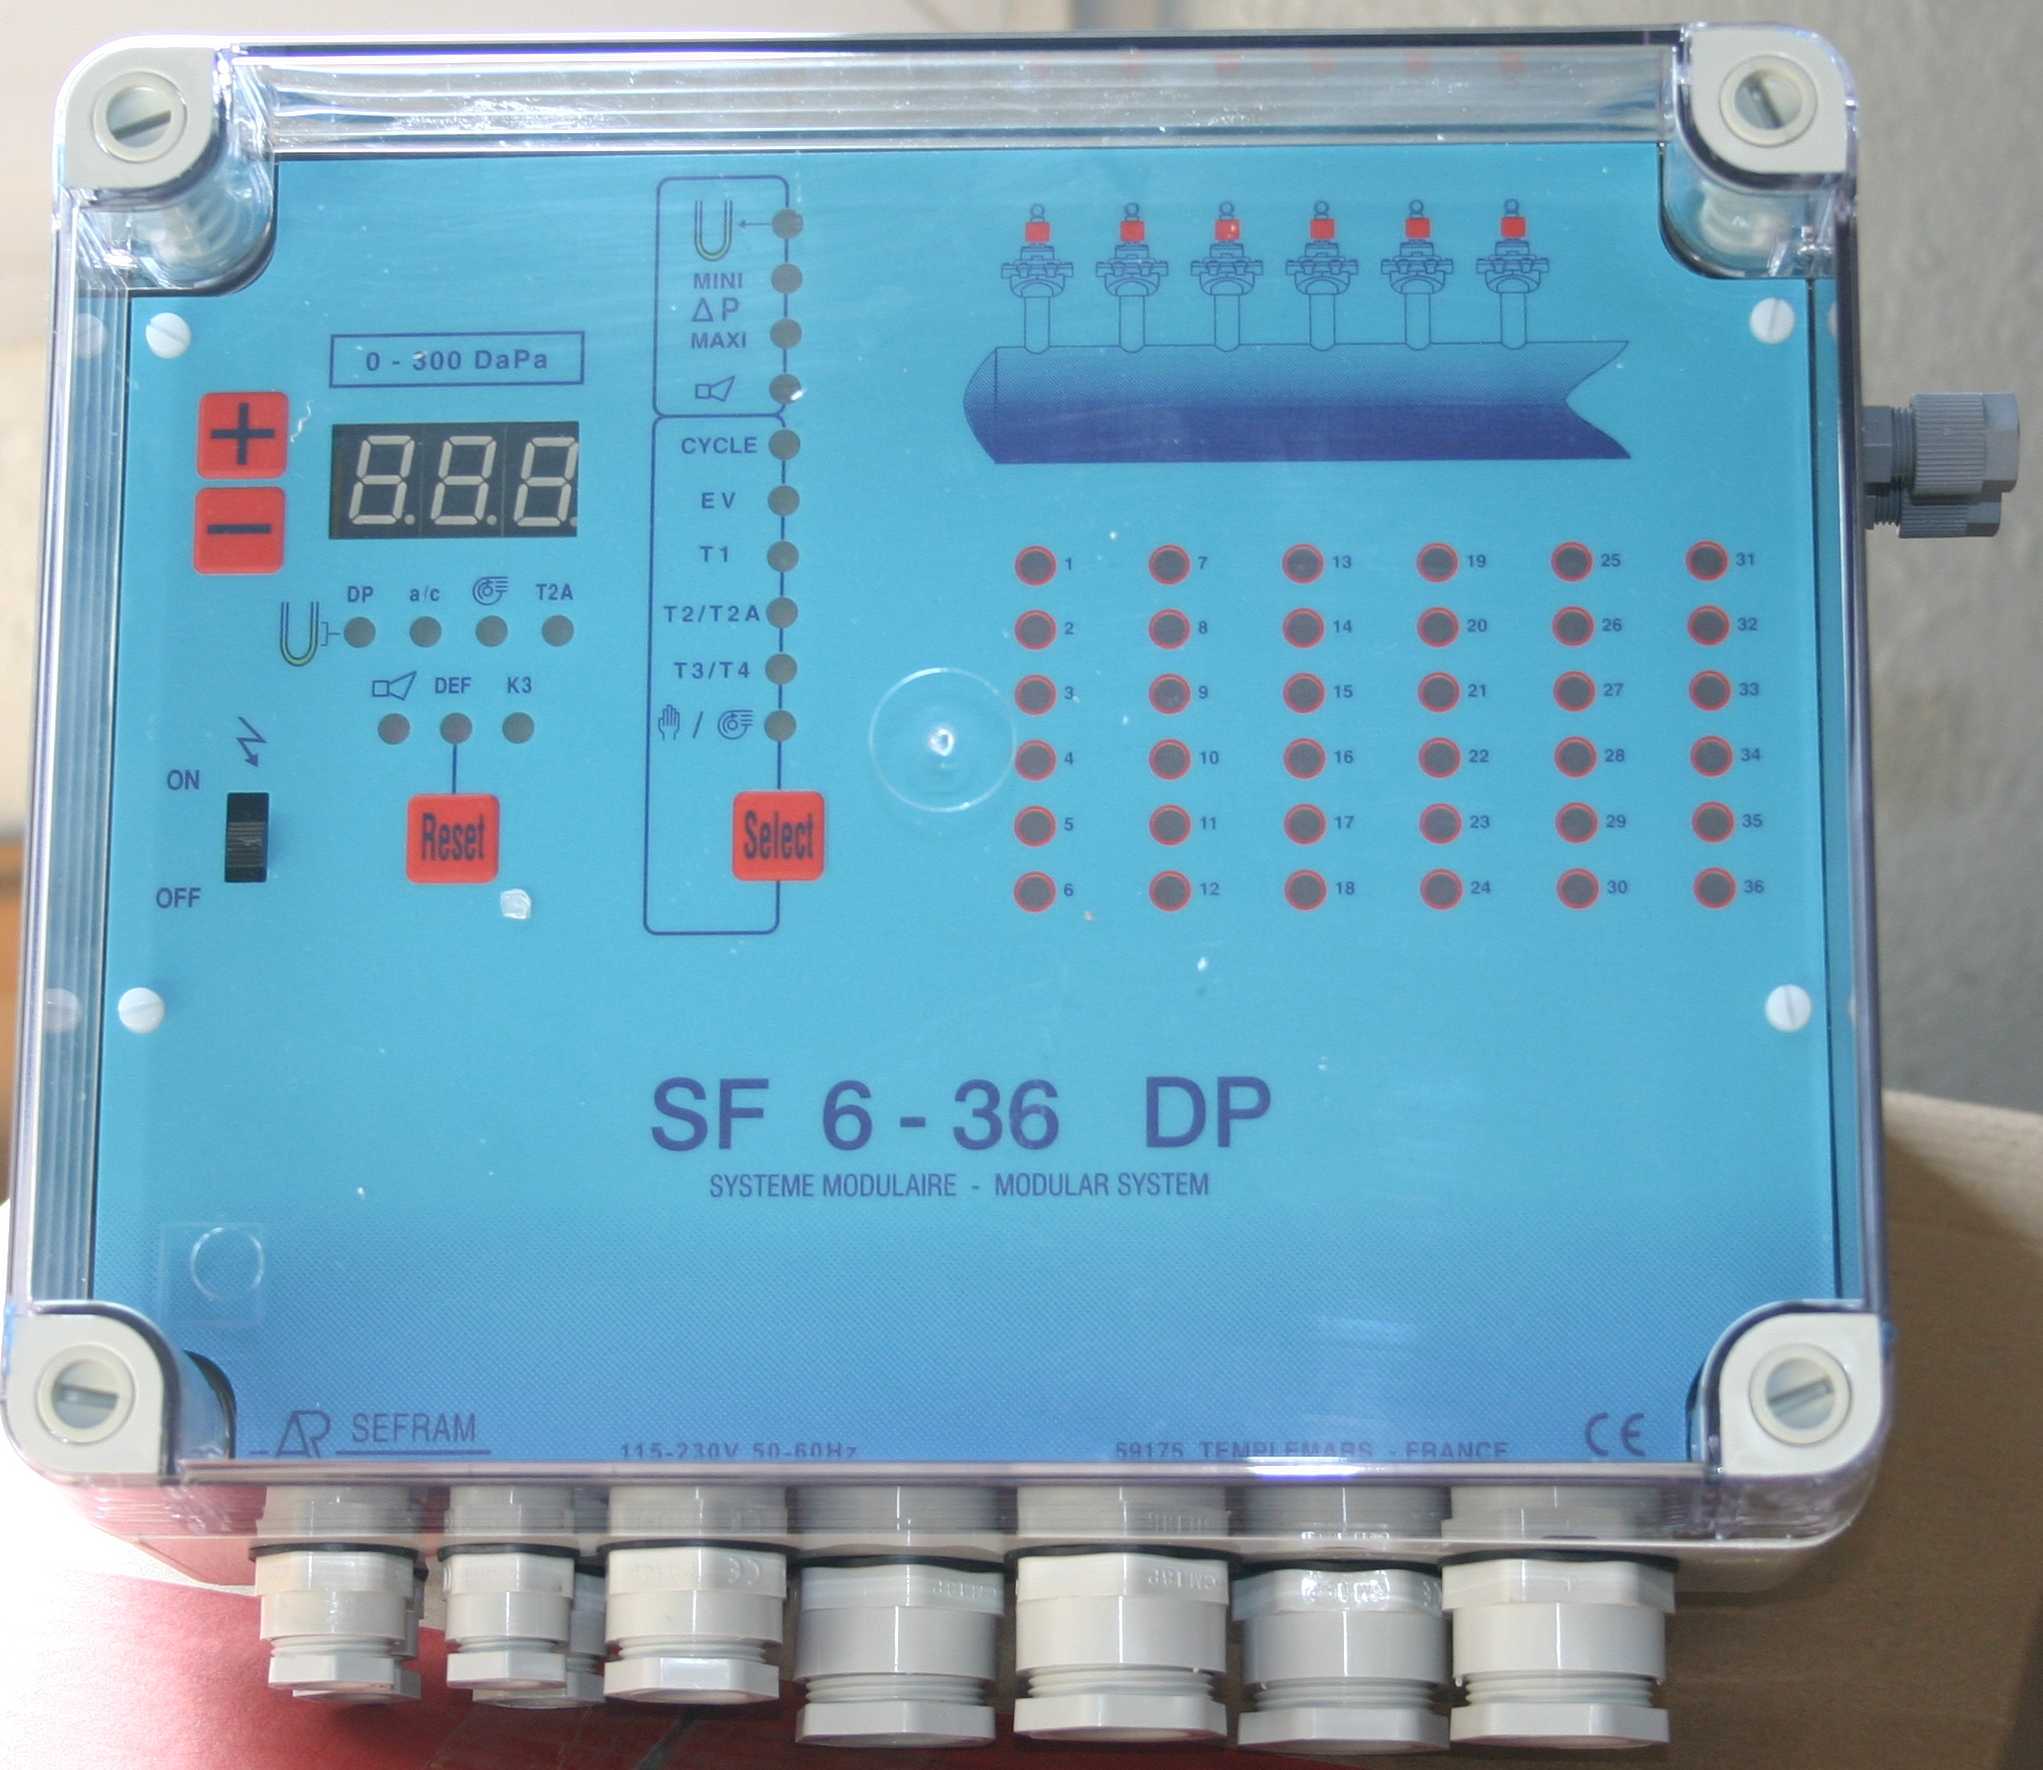 Sequenceur de mesure de pression differentielle sf6-36dp v2_0